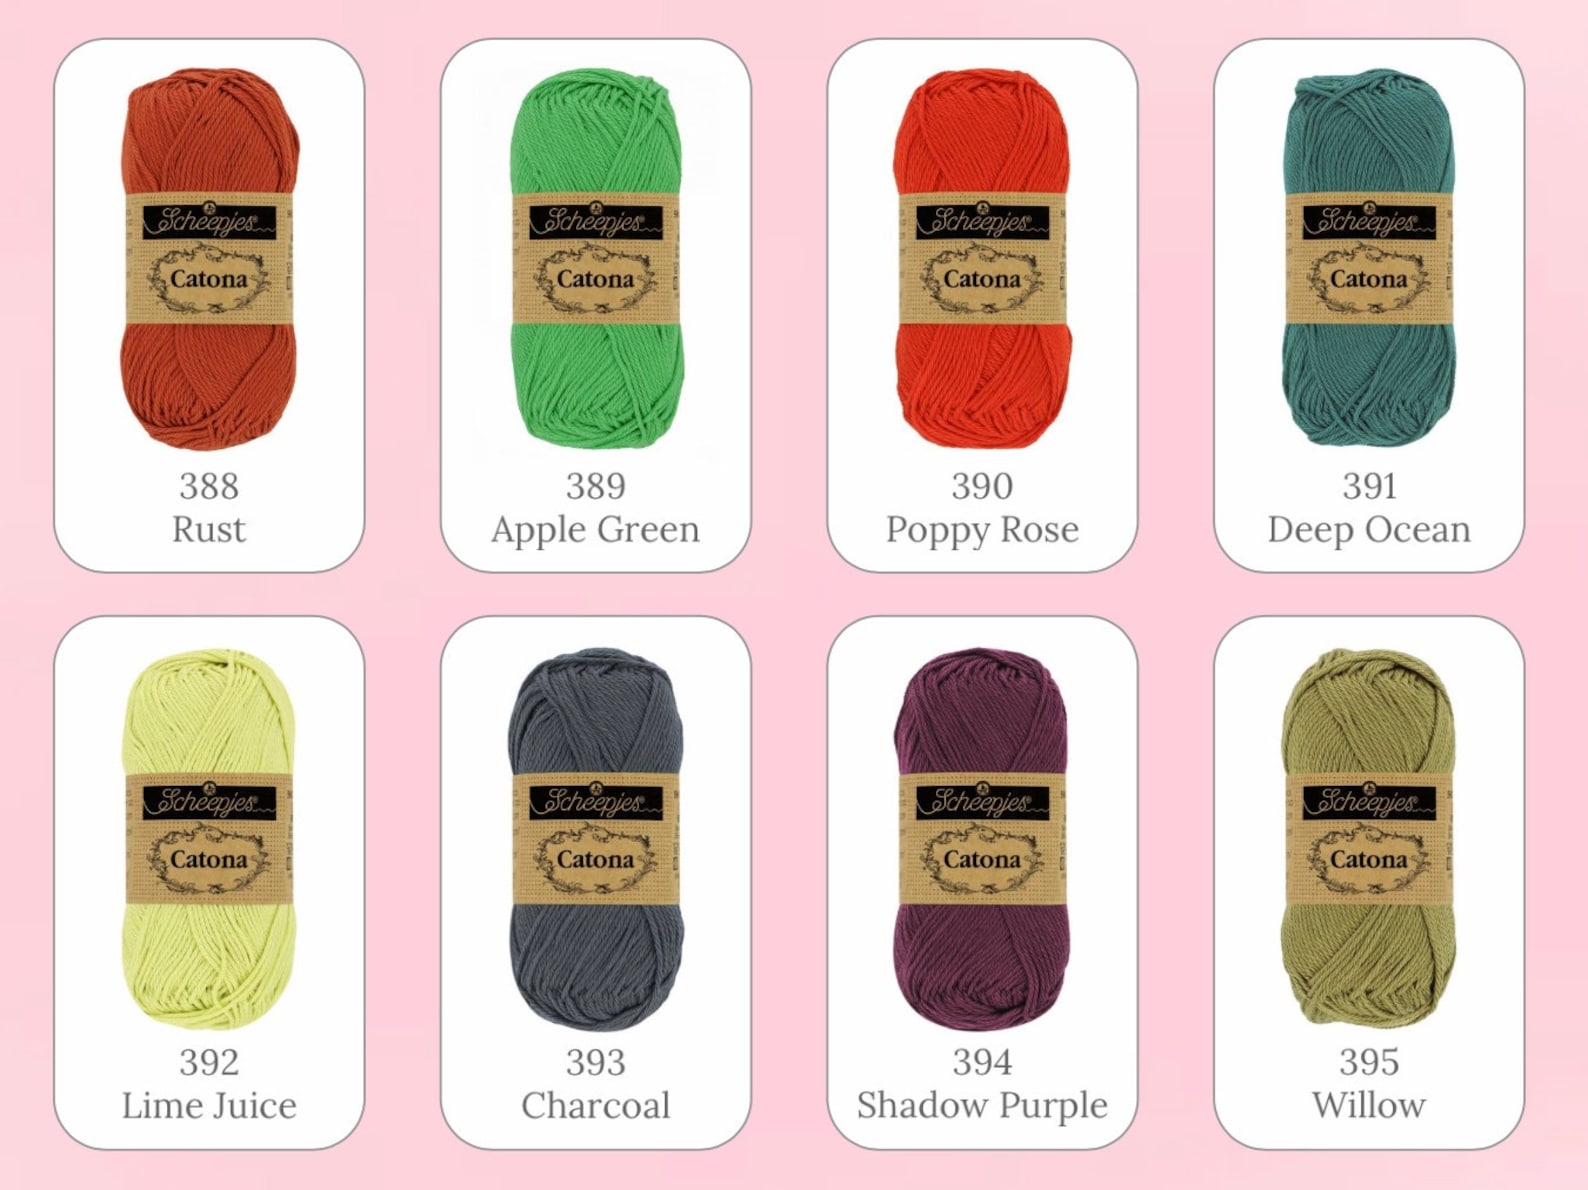 Catona 50g Yarn Color Codes 074-395 / Scheepjes Brand - Etsy